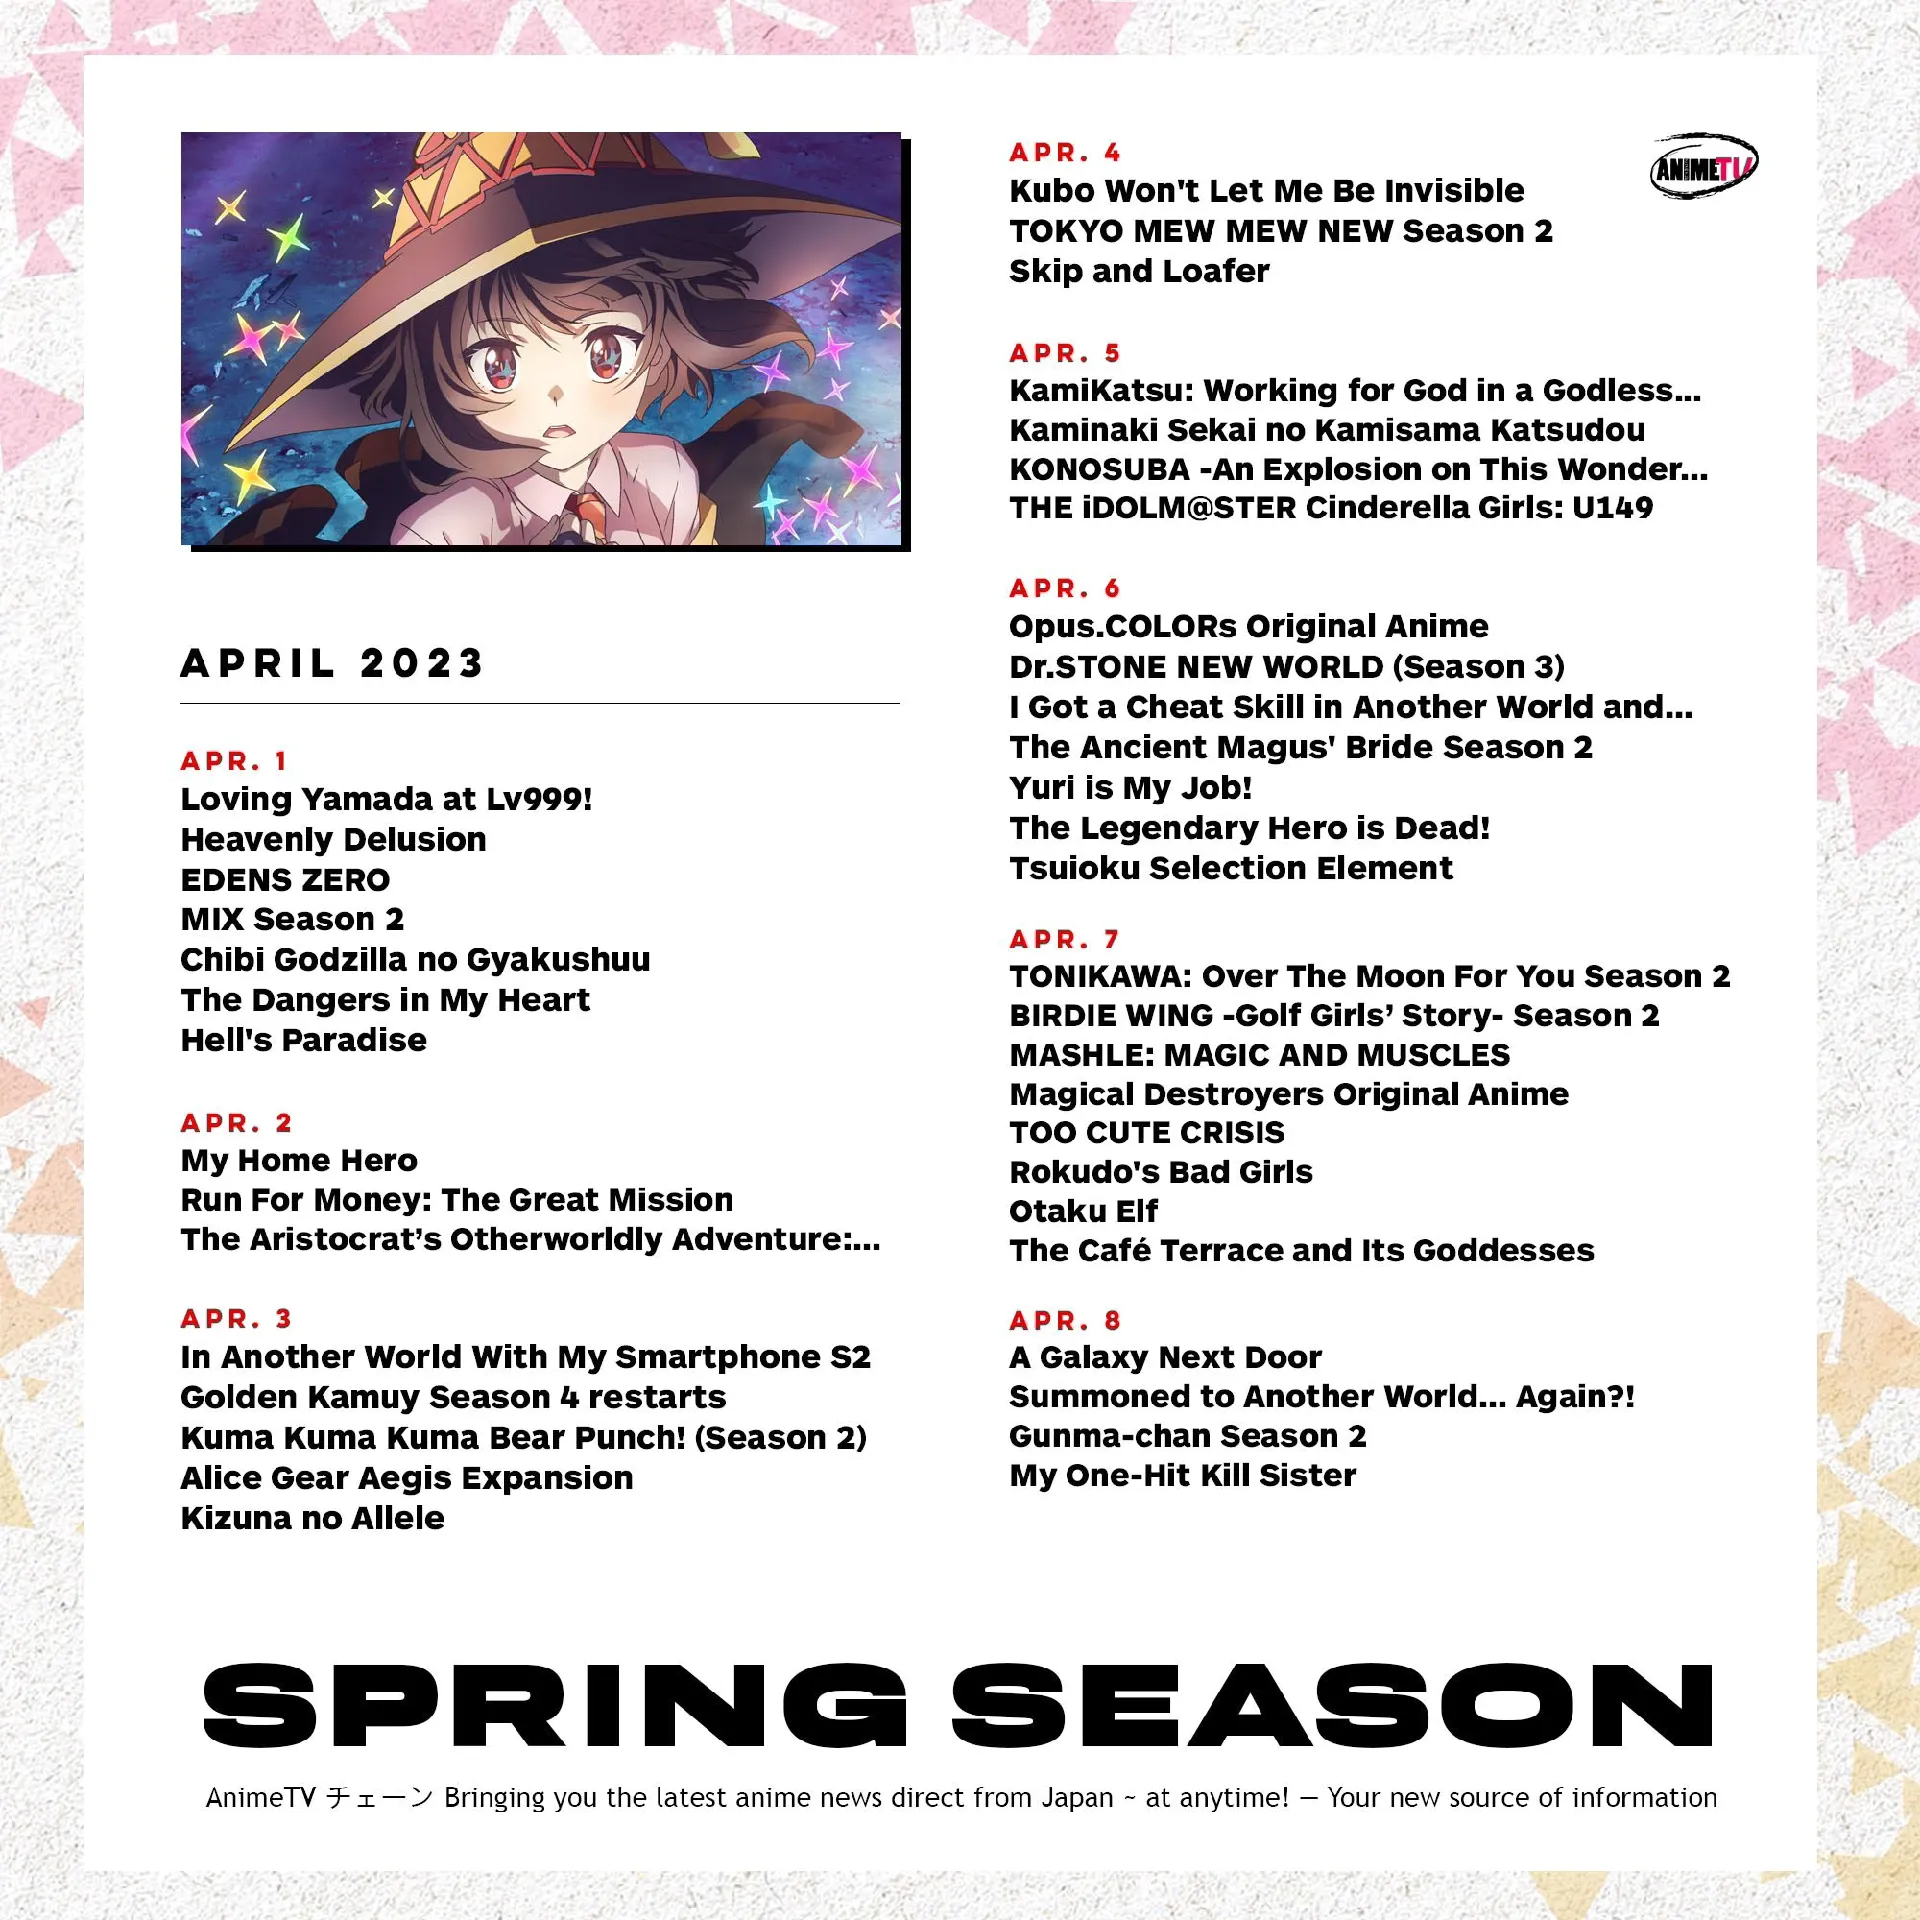 Tokyo Mew Mew New Season 2 Announced, Premiere Date Set for April 2023